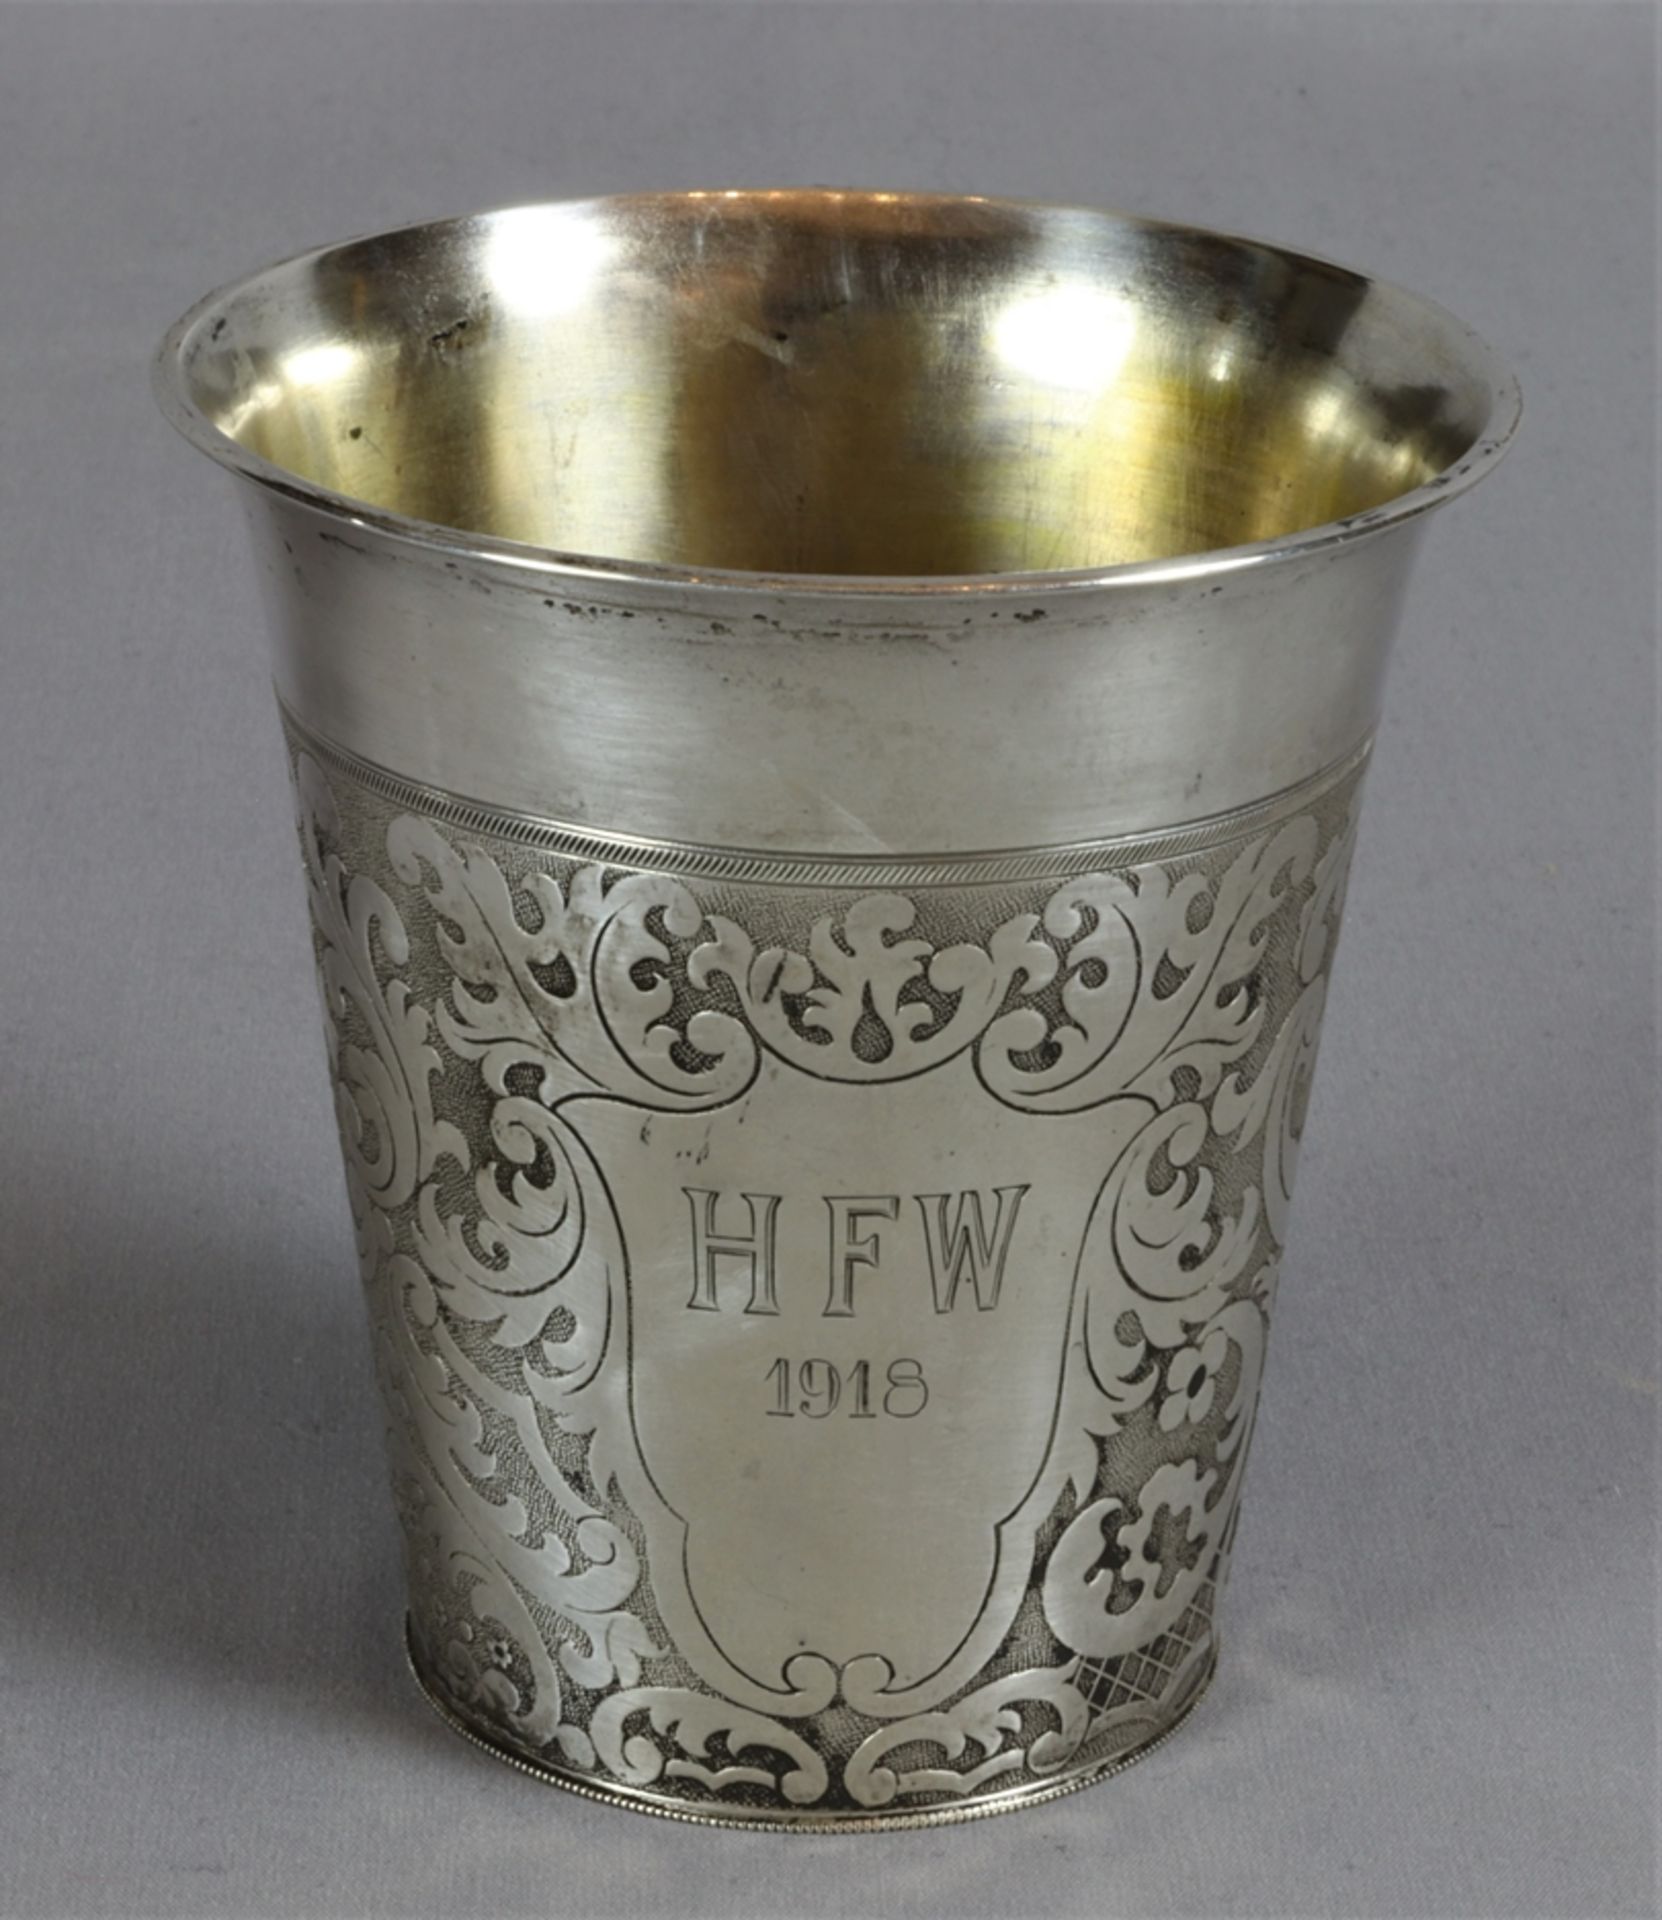 Friendship cup Historicism circa 1900-1920, German